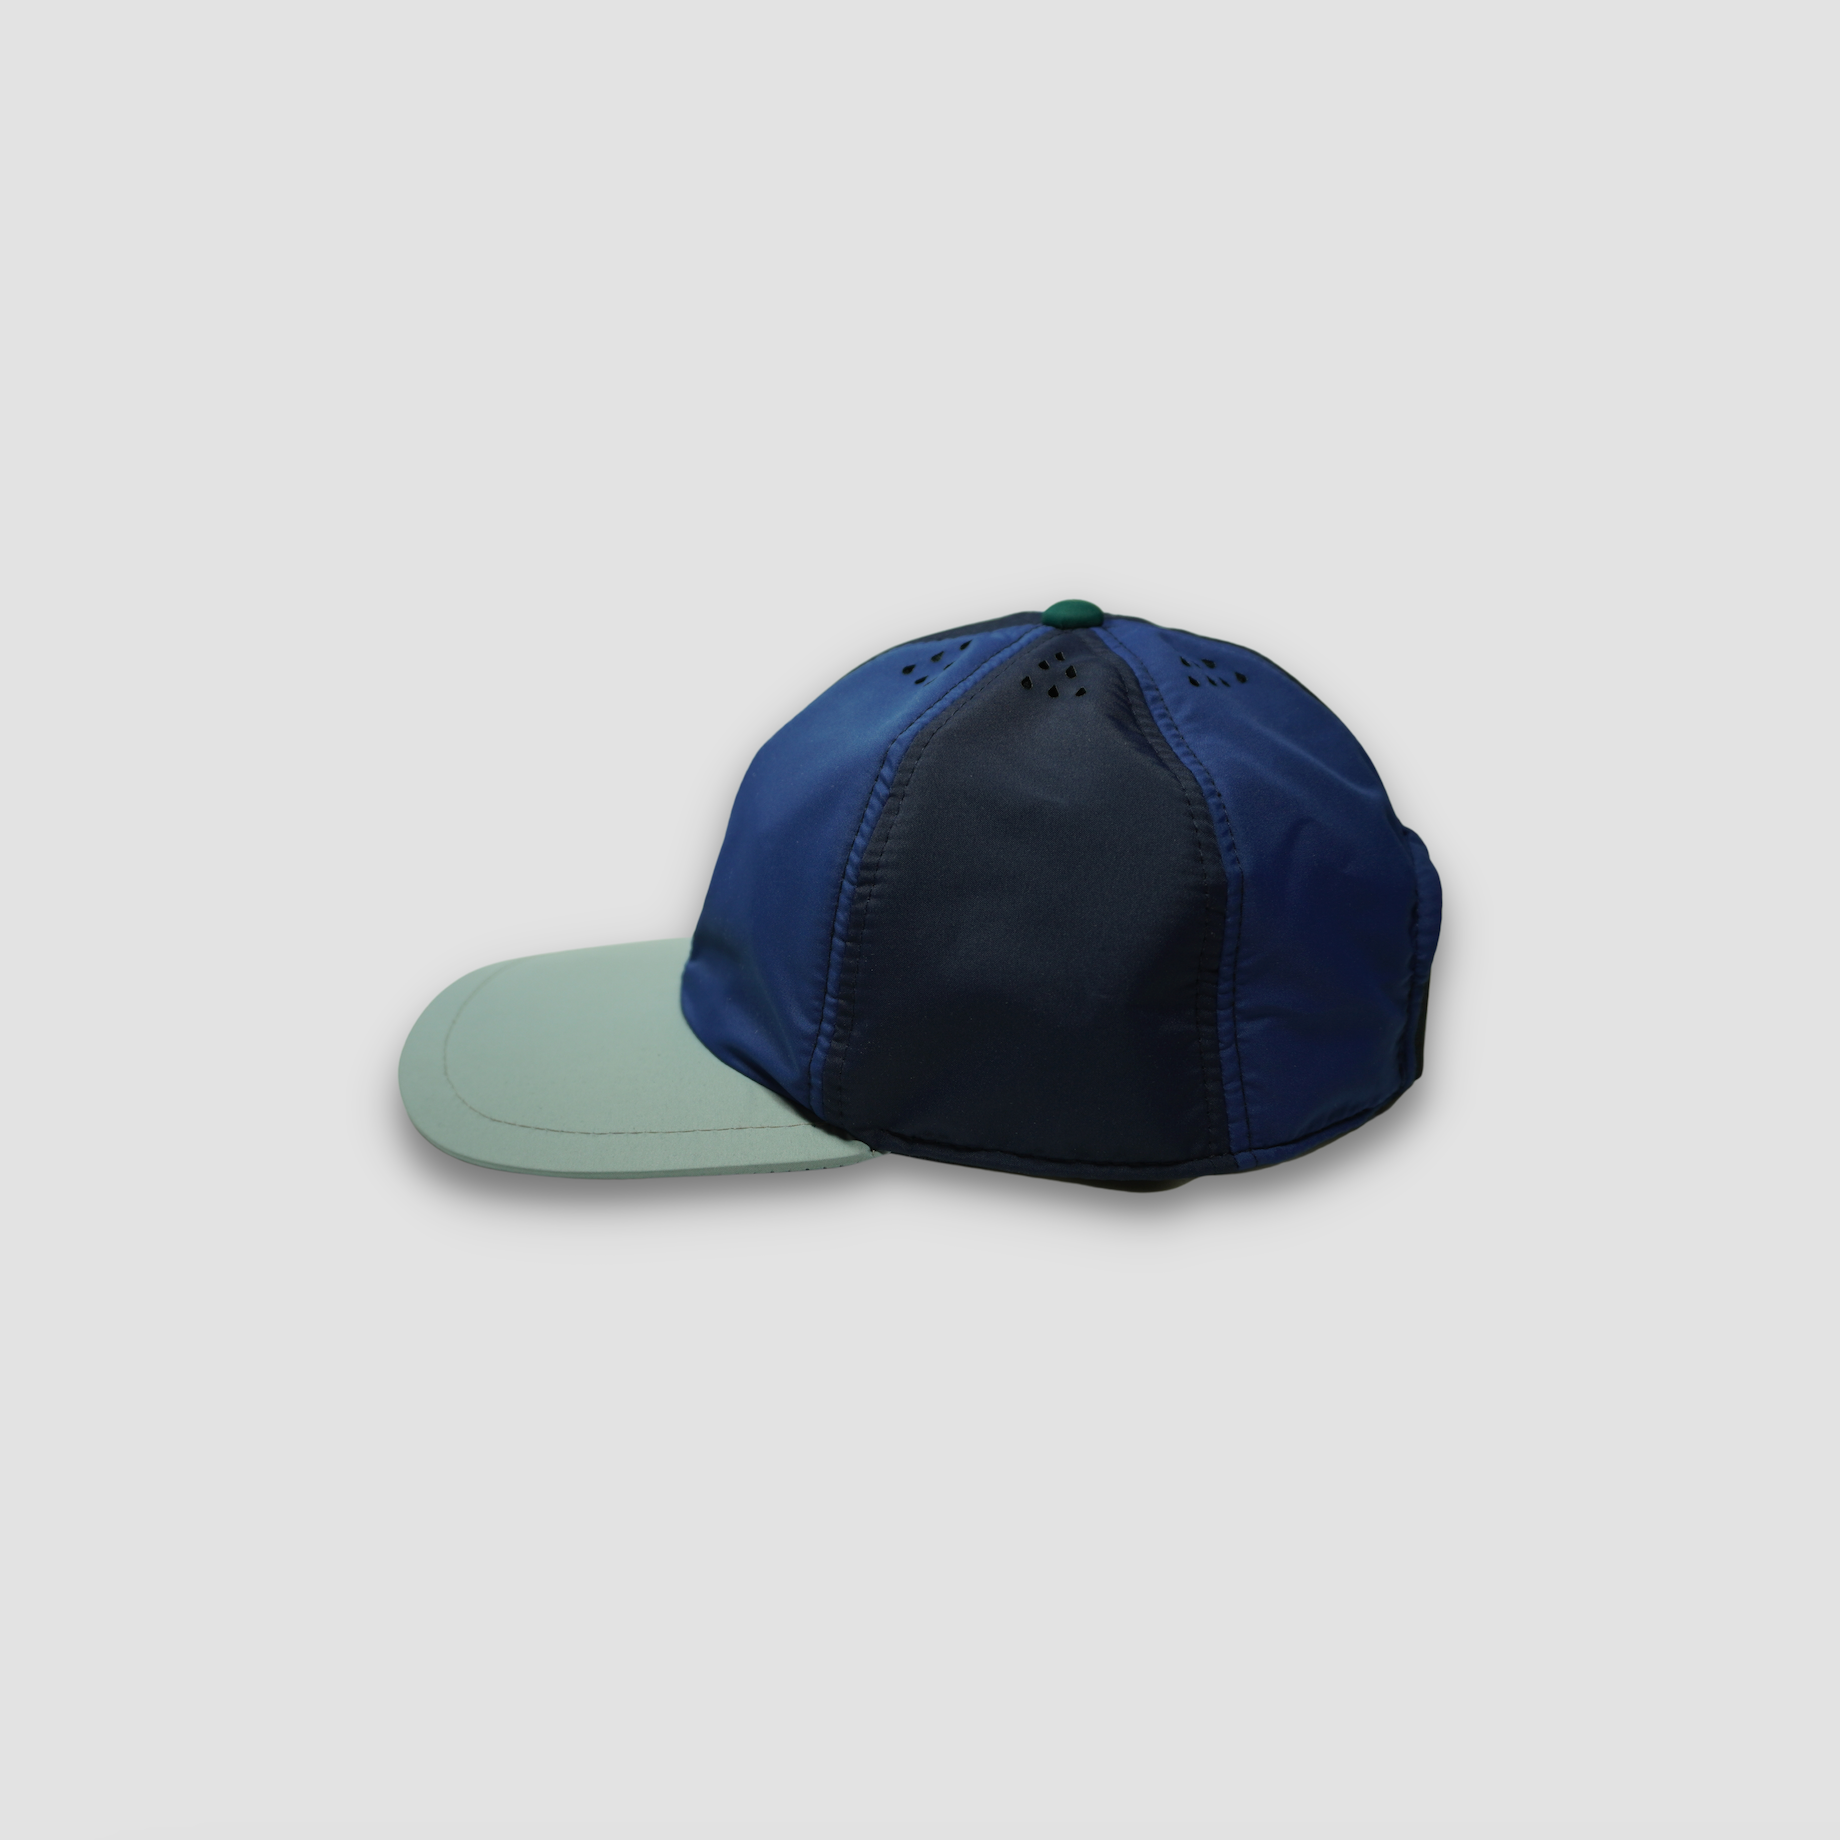 Grinberg Hat - BLUE BLUE [MC-GBG-BLUBLU]